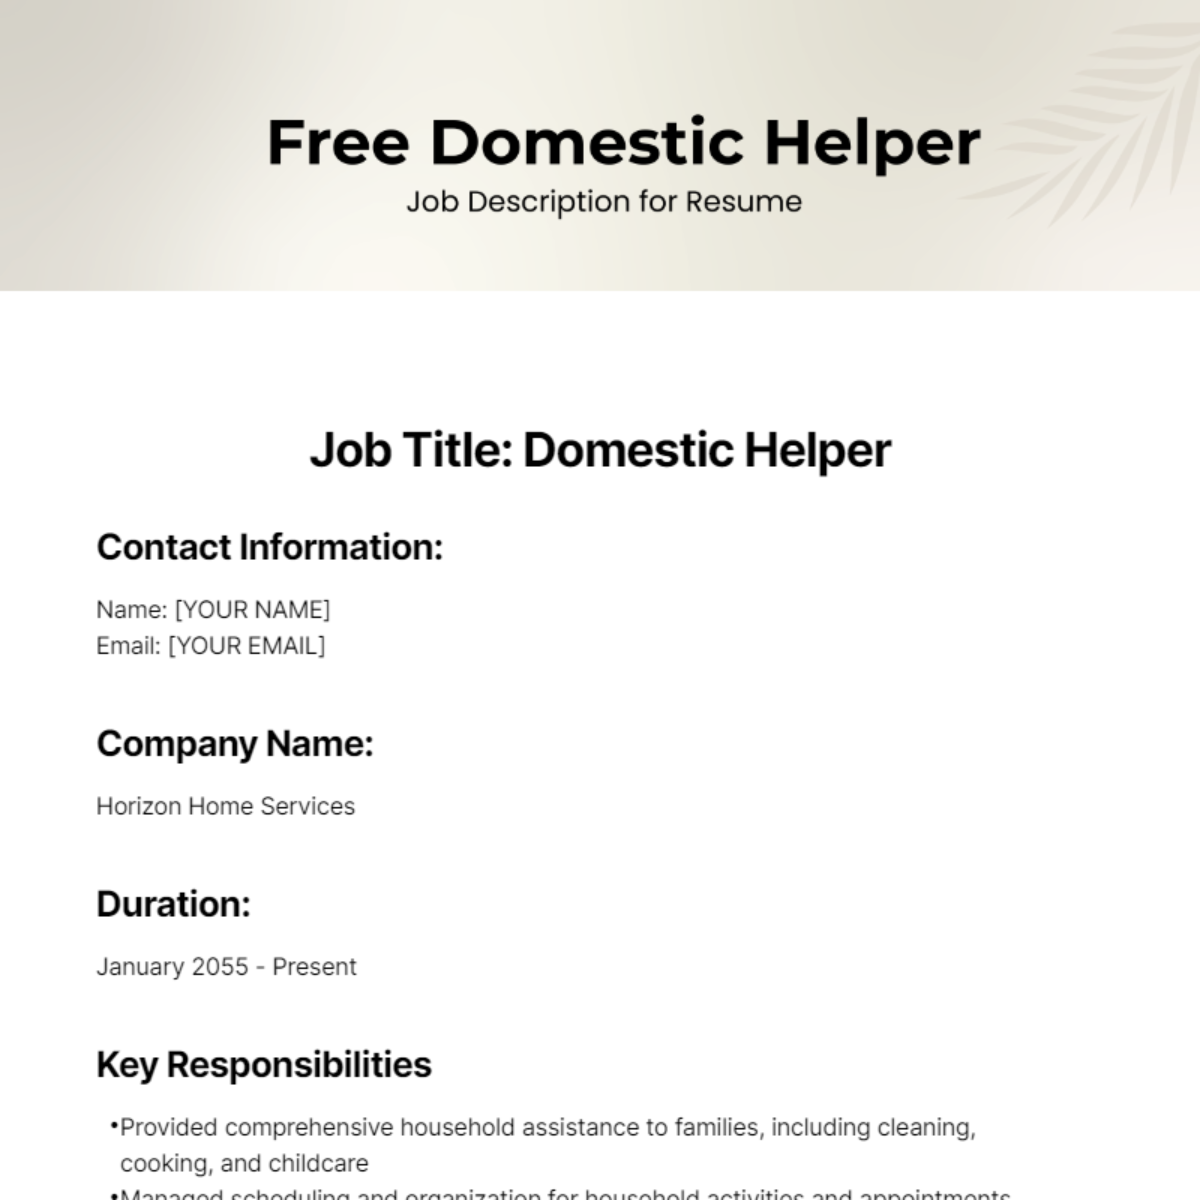 Domestic Helper Job Description for Resume Template